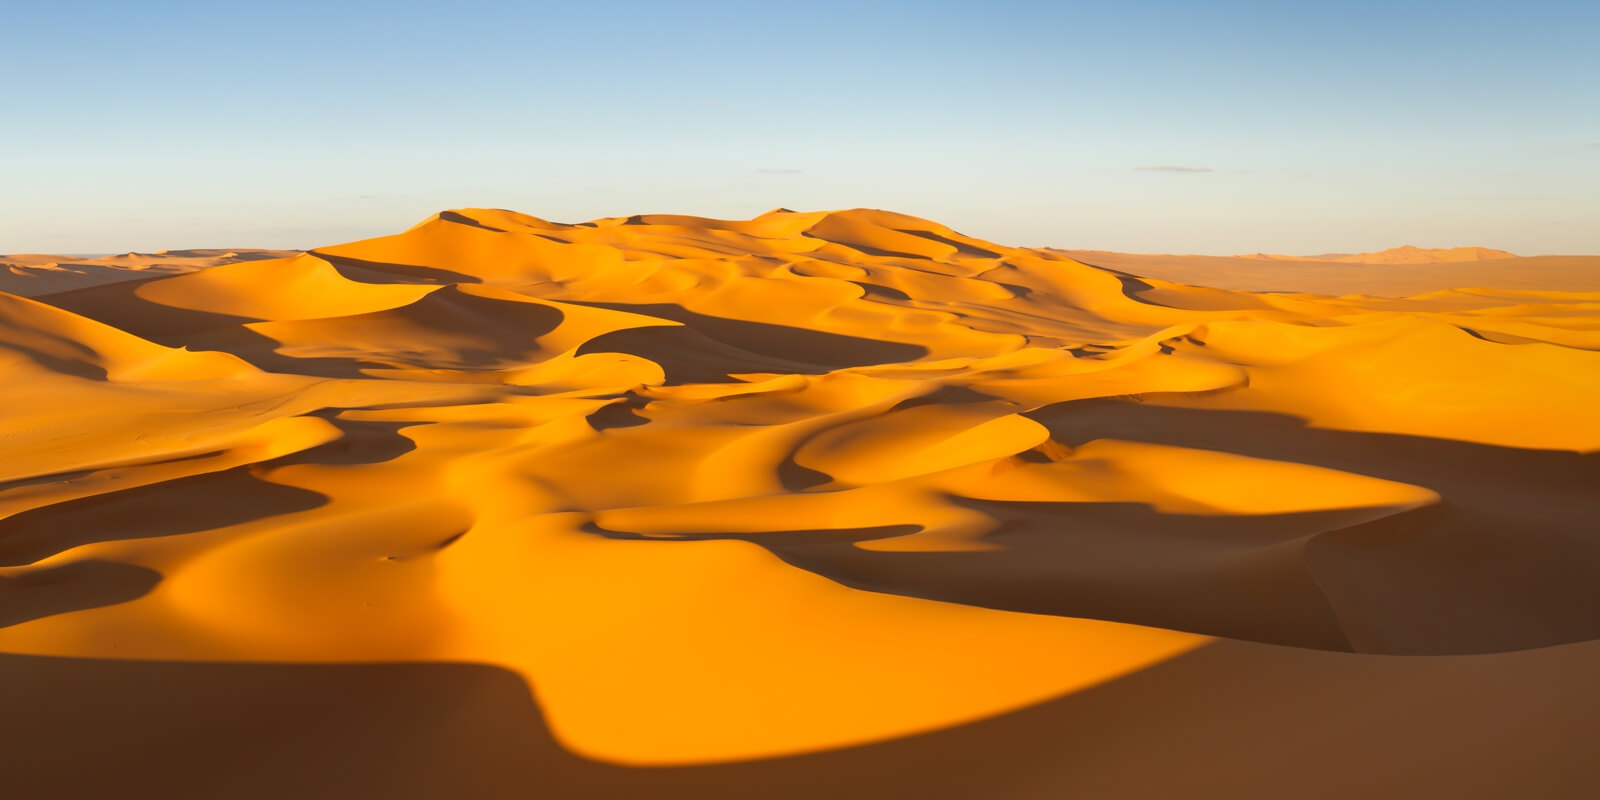 Vlies Tapete XXL Poster Fototapete Panorama Wüste